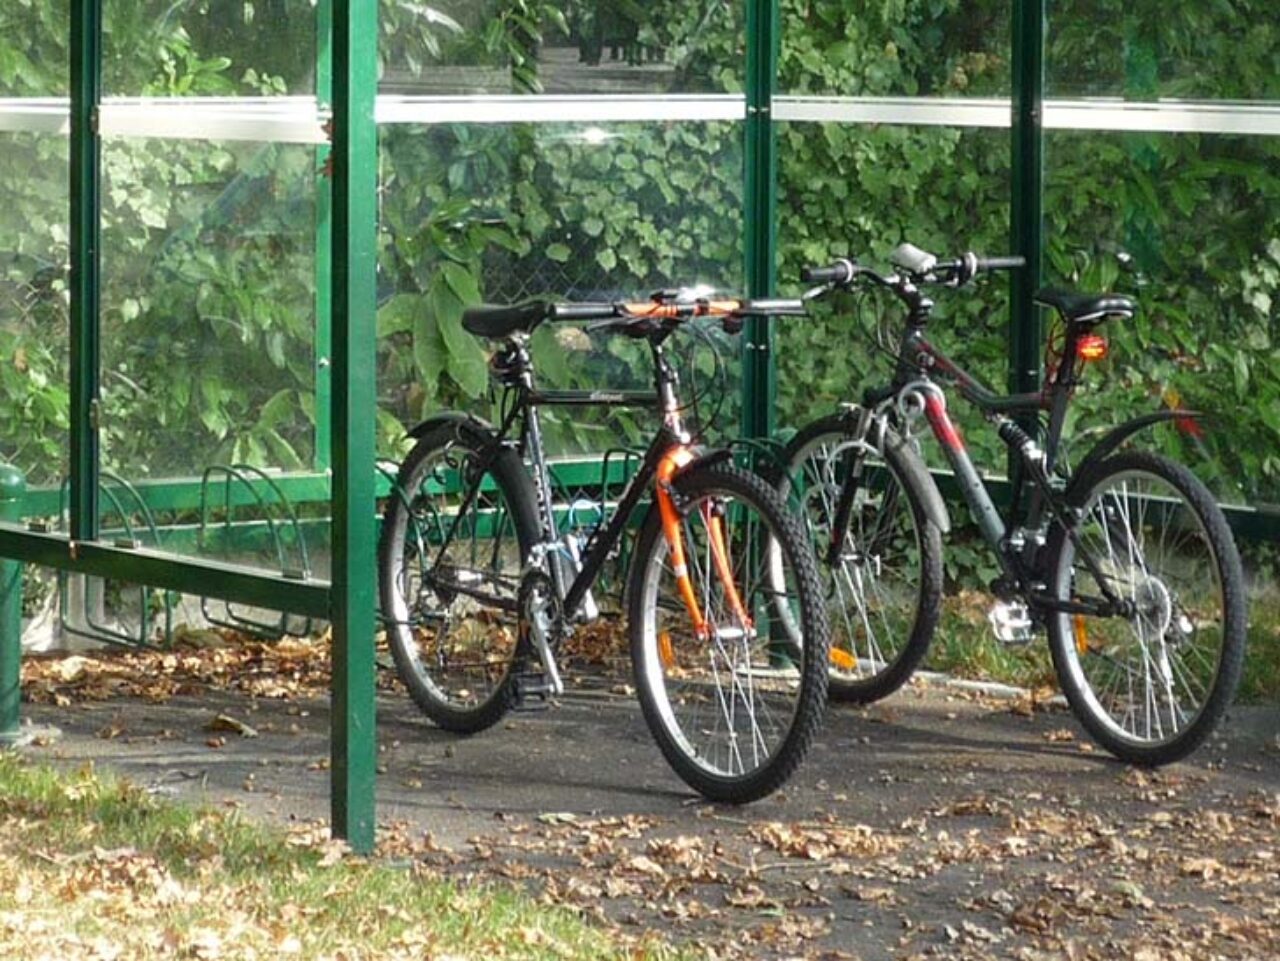 Rack vélos - Support Déco - Abri vélos - Ecole vétérinaire Nantes (44)jpg